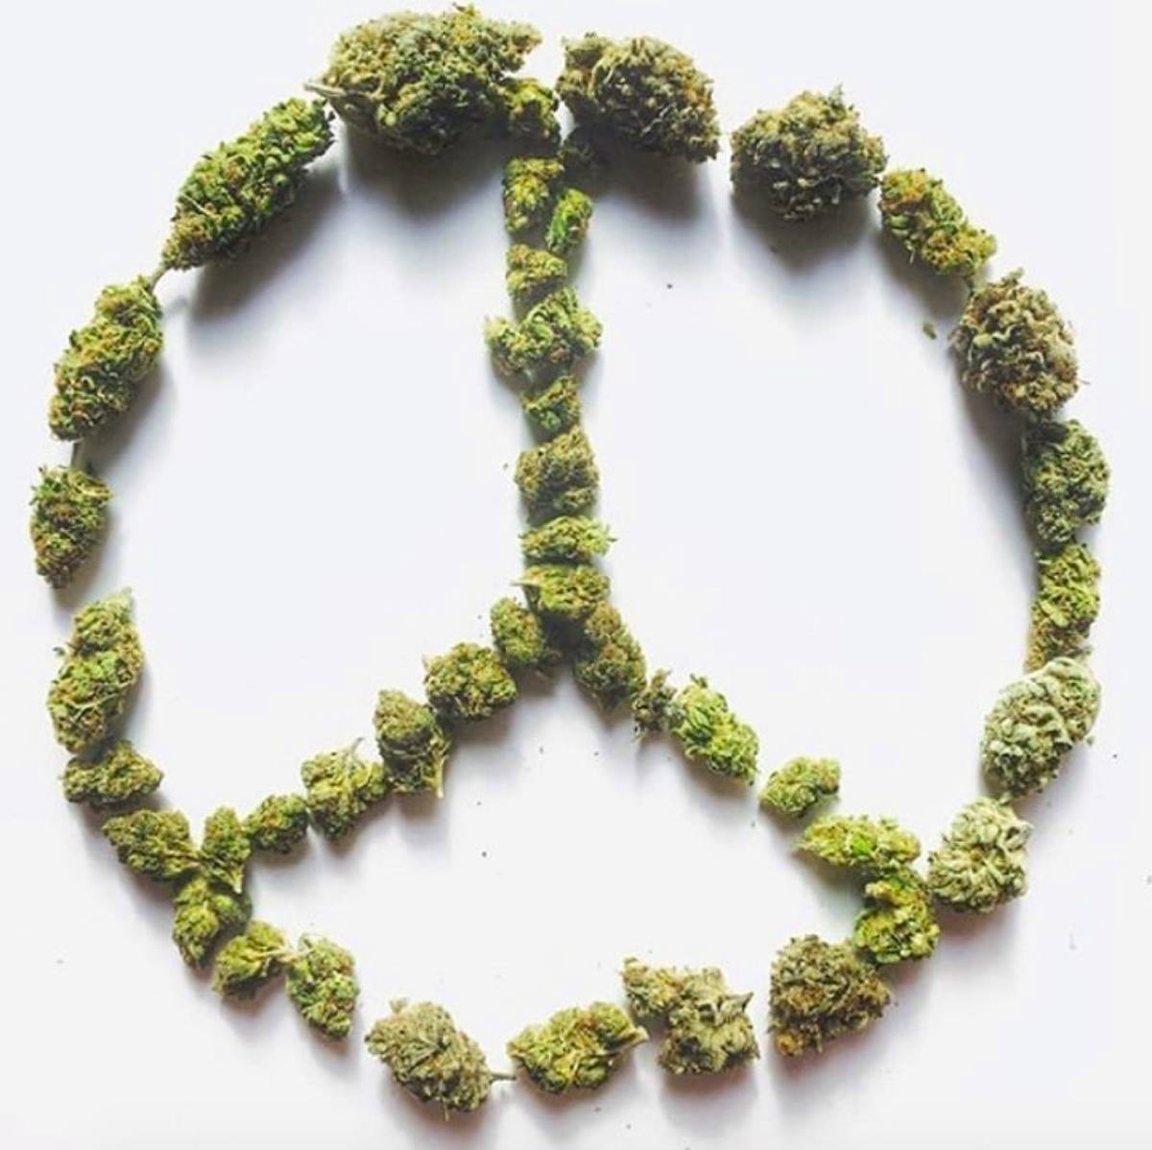 CannabisHubHQ: #Peace ☮️

#cannabiscommunity #cannabisculture #cannabisindustry